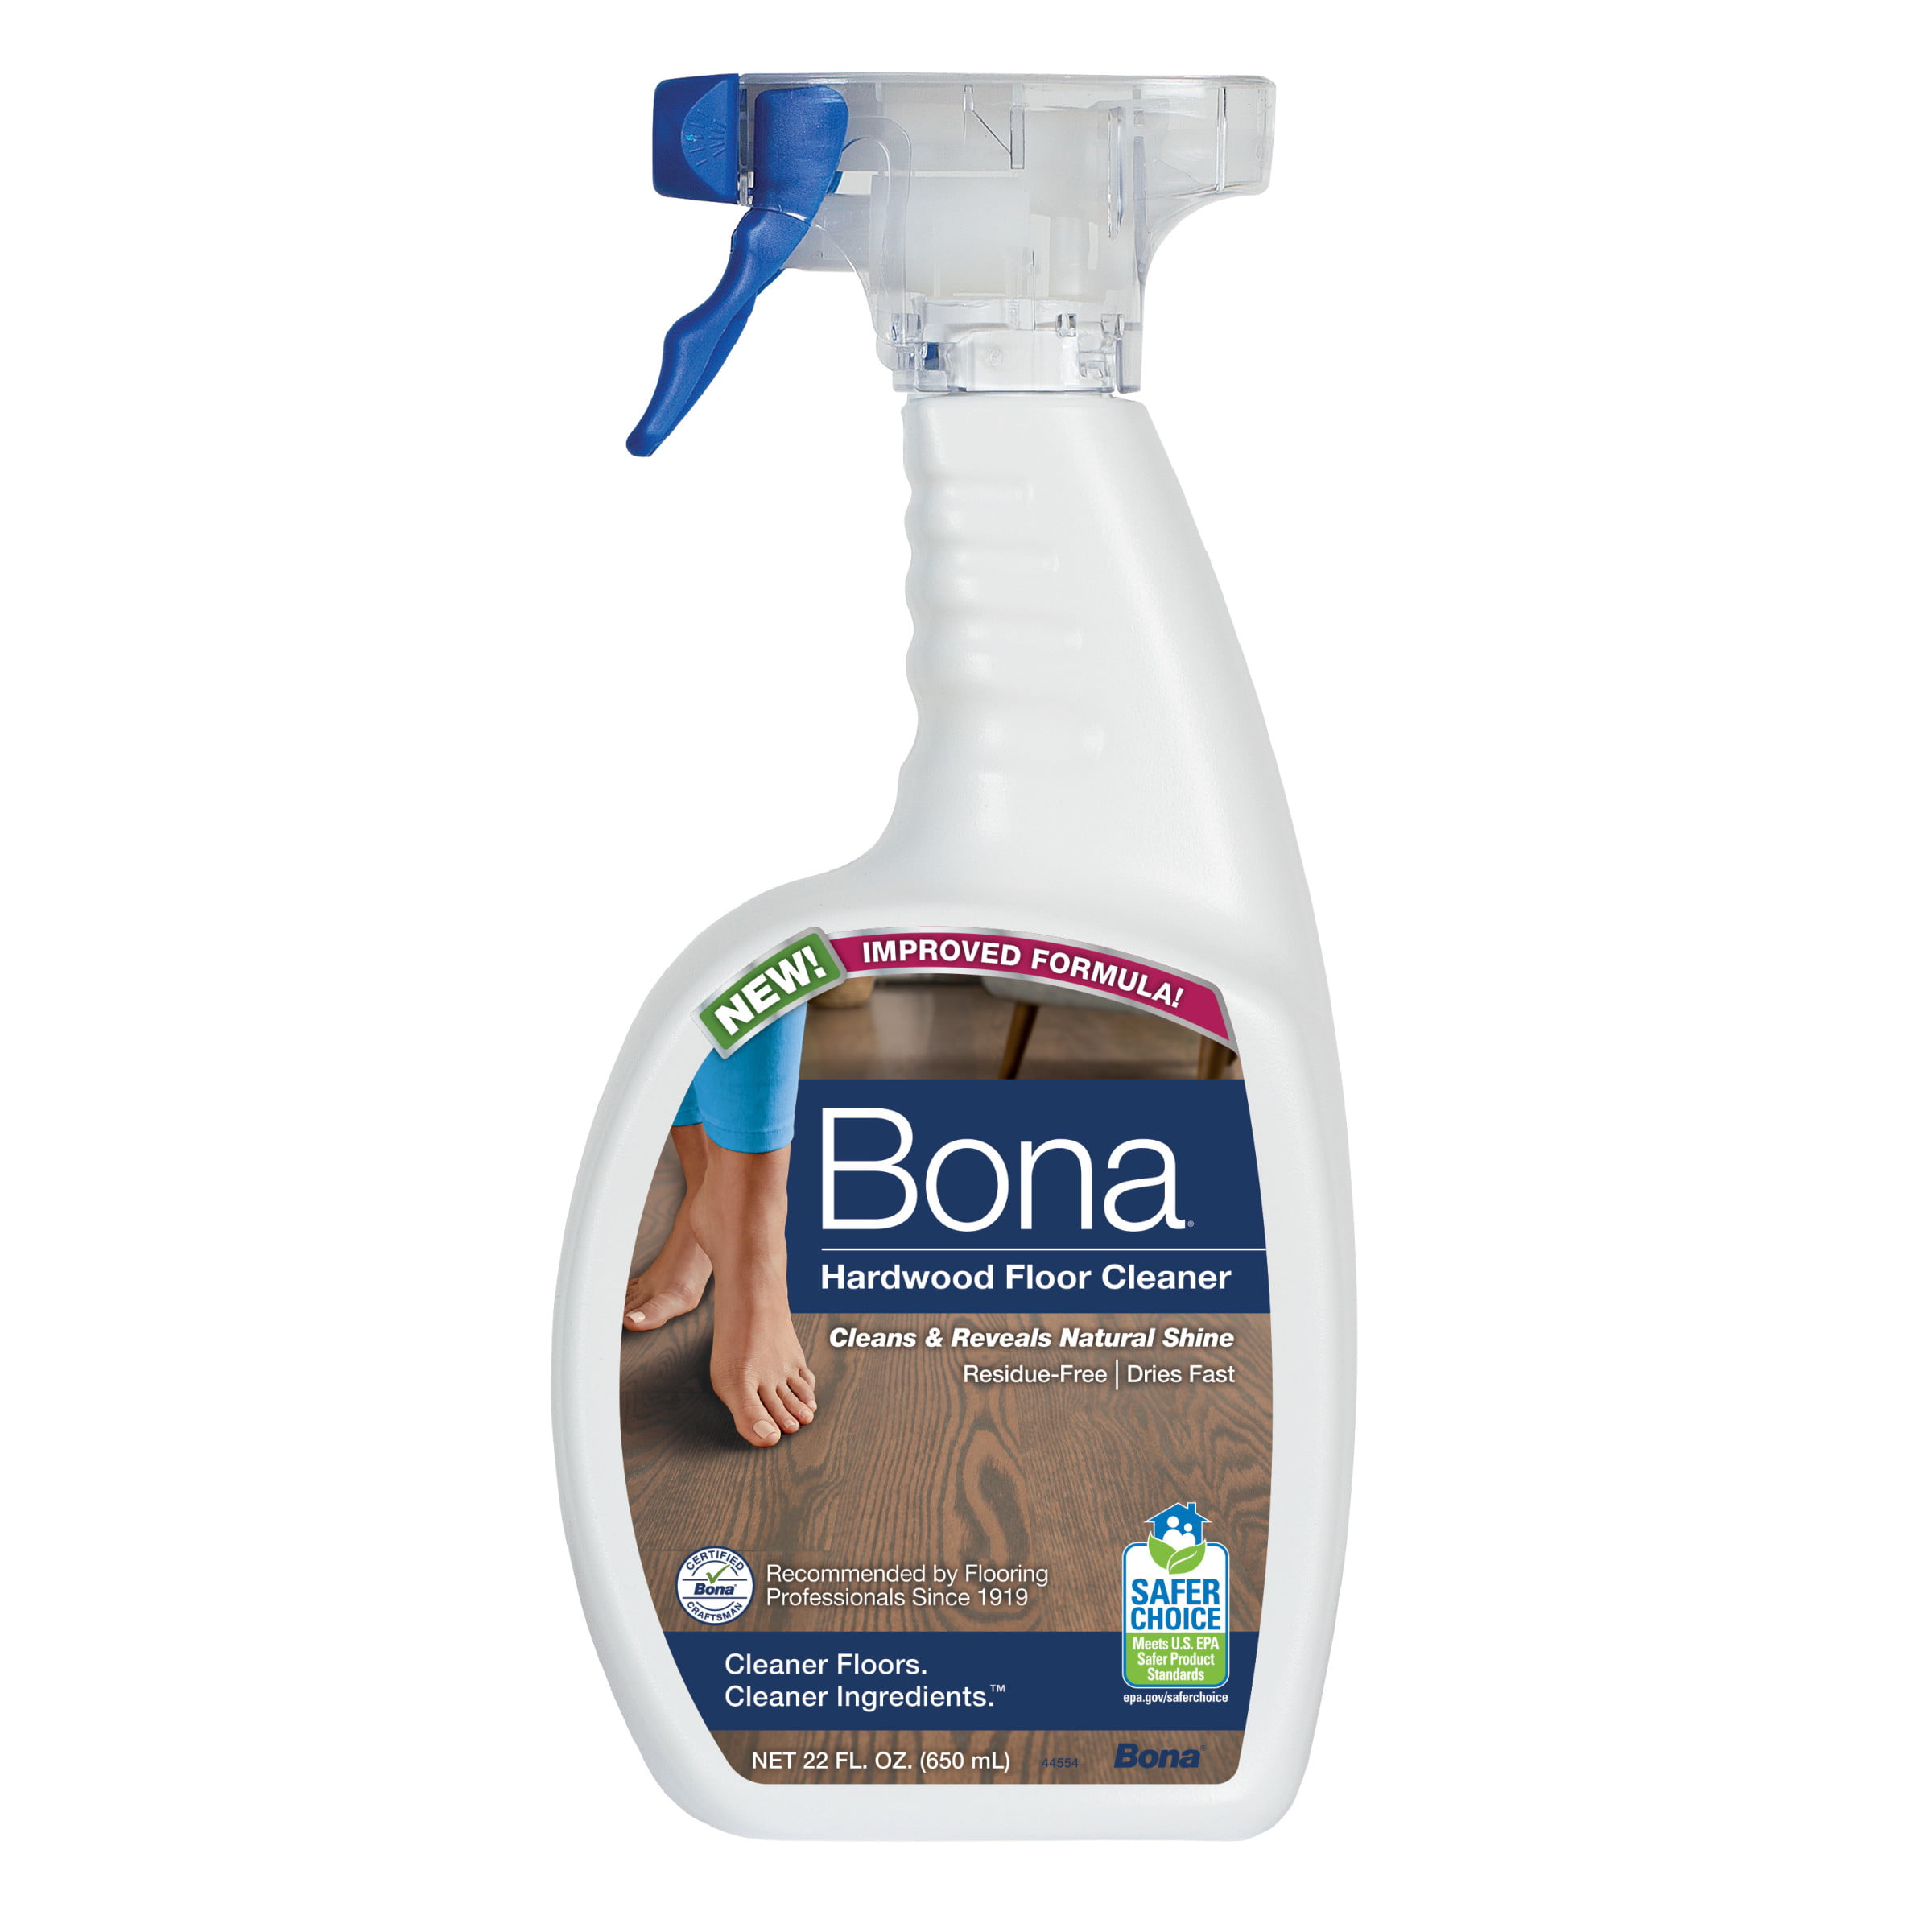 Bona Hardwood Floor Cleaner Spray 22 Fl, Bona Hardwood Floor Refresher Reviews